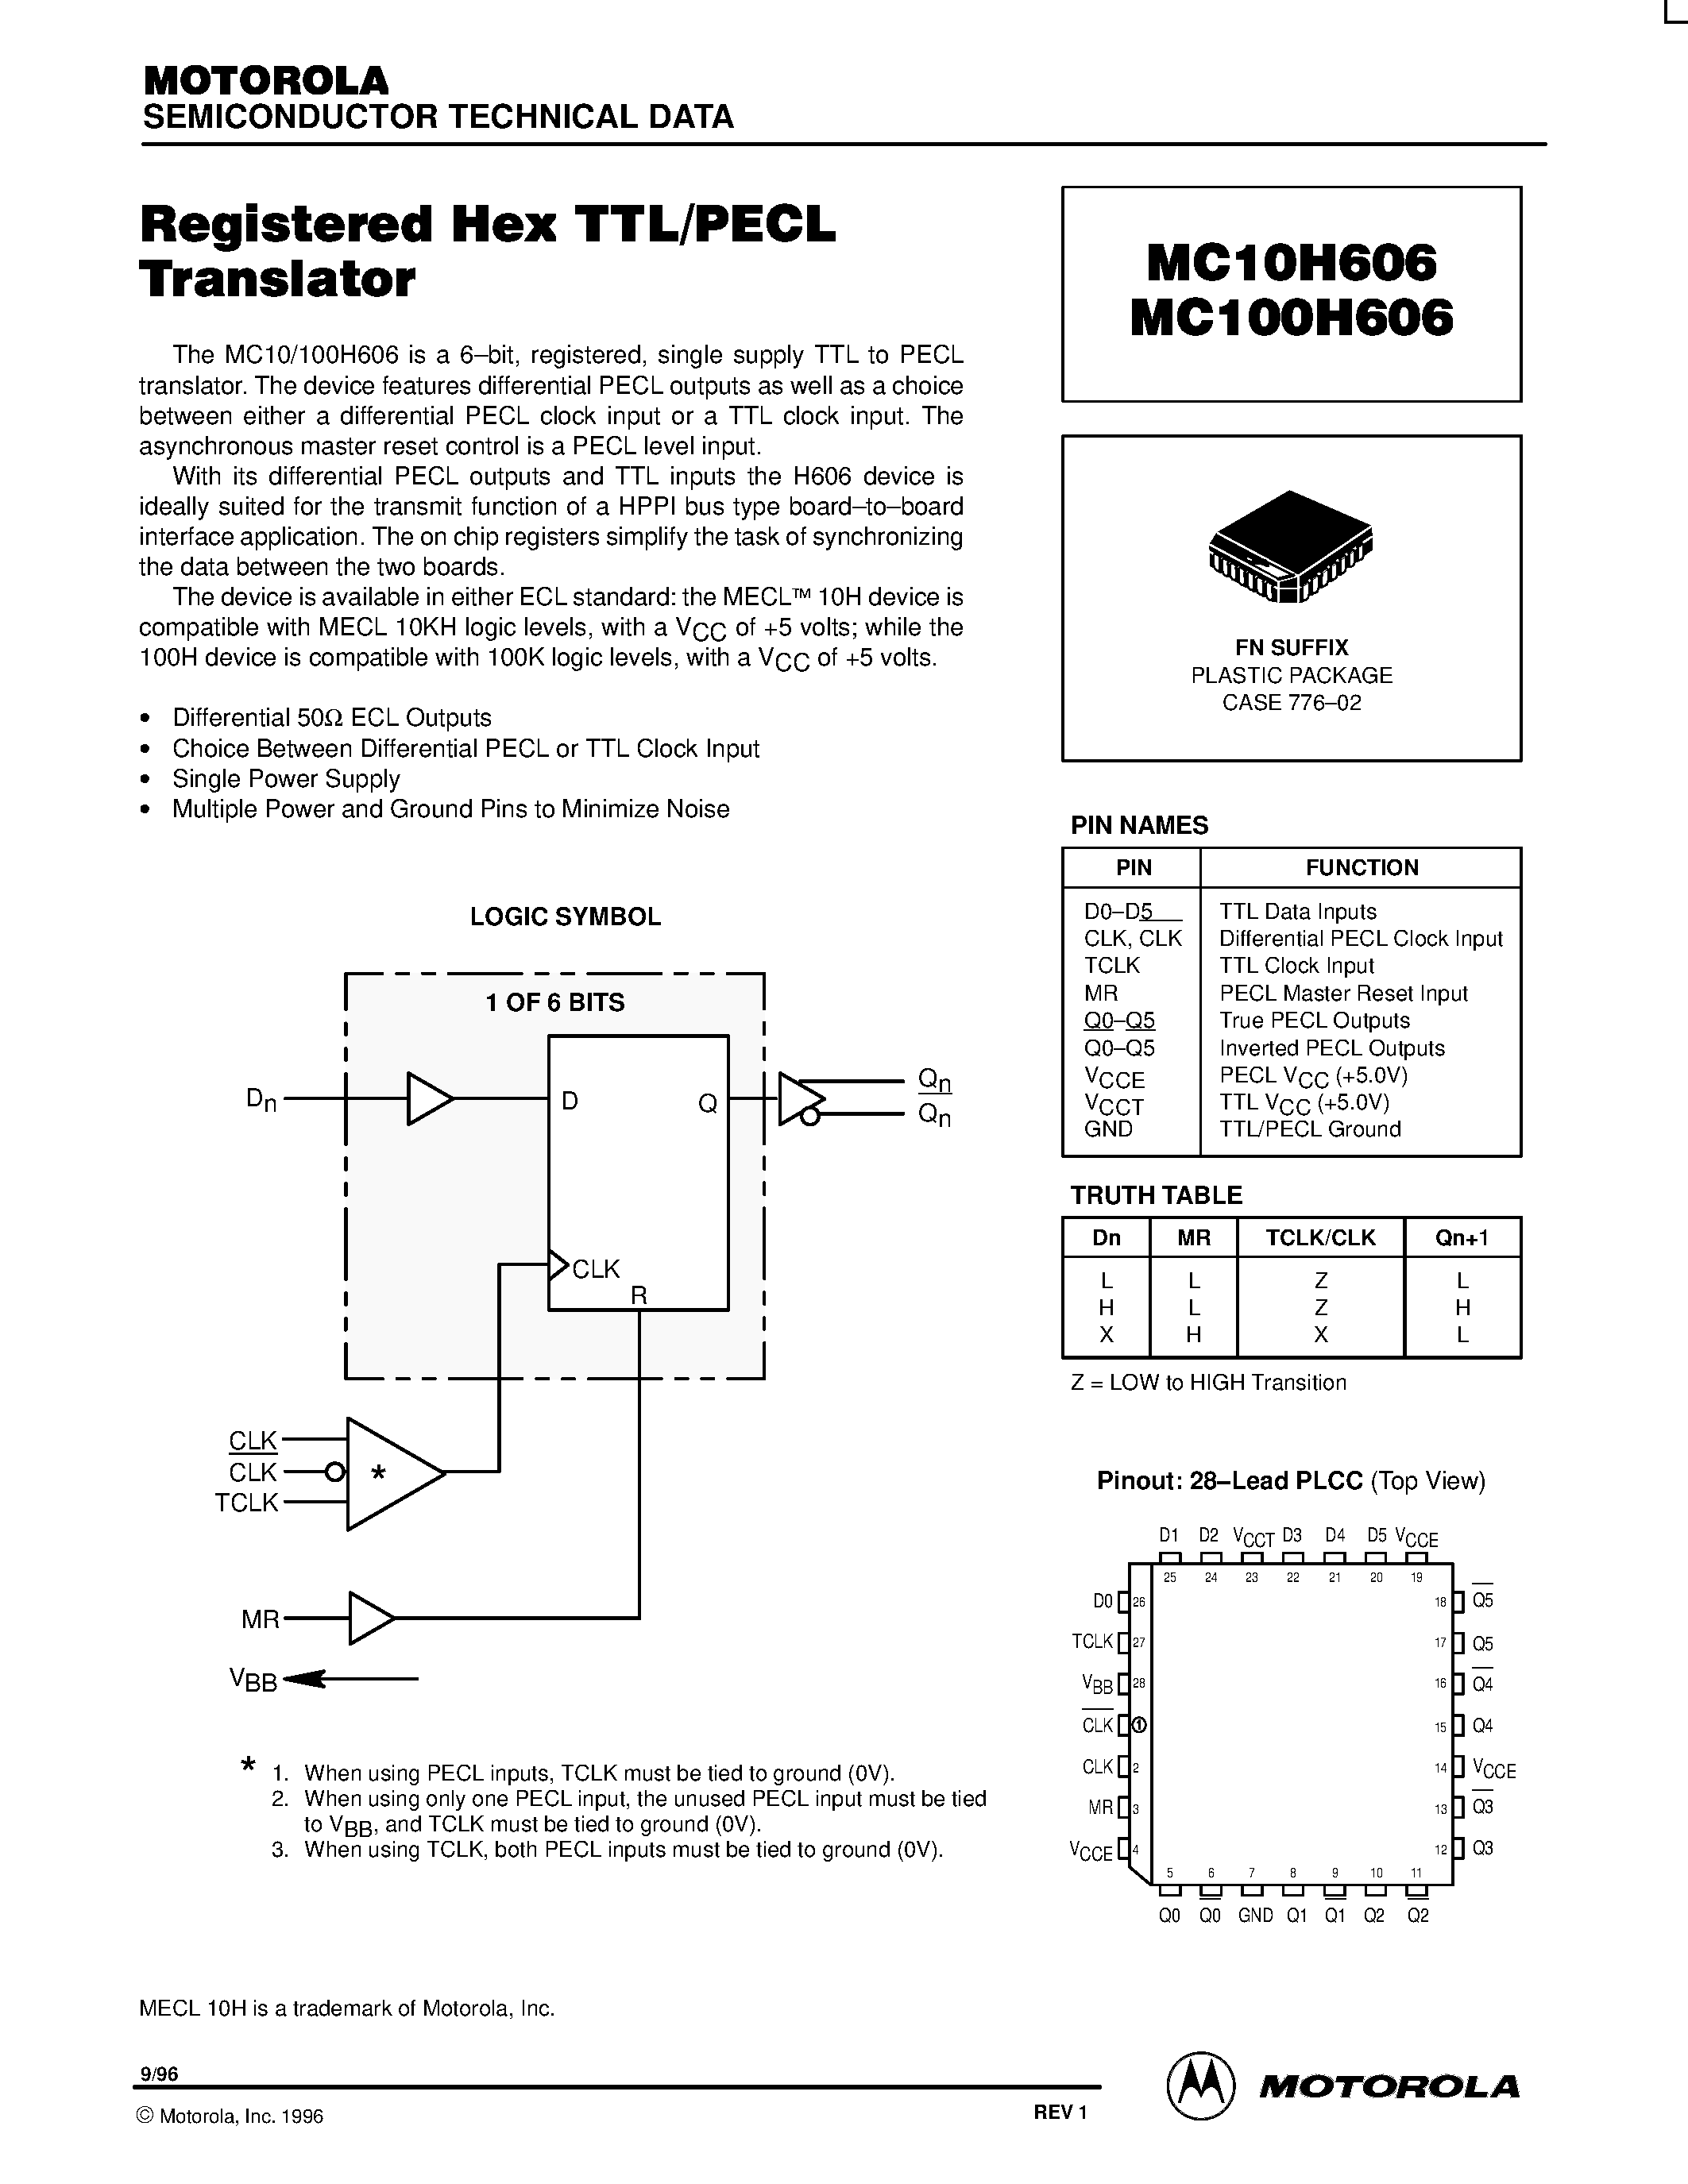 Datasheet MC10H606 - Registered Hex TTL/PECL Translator page 1